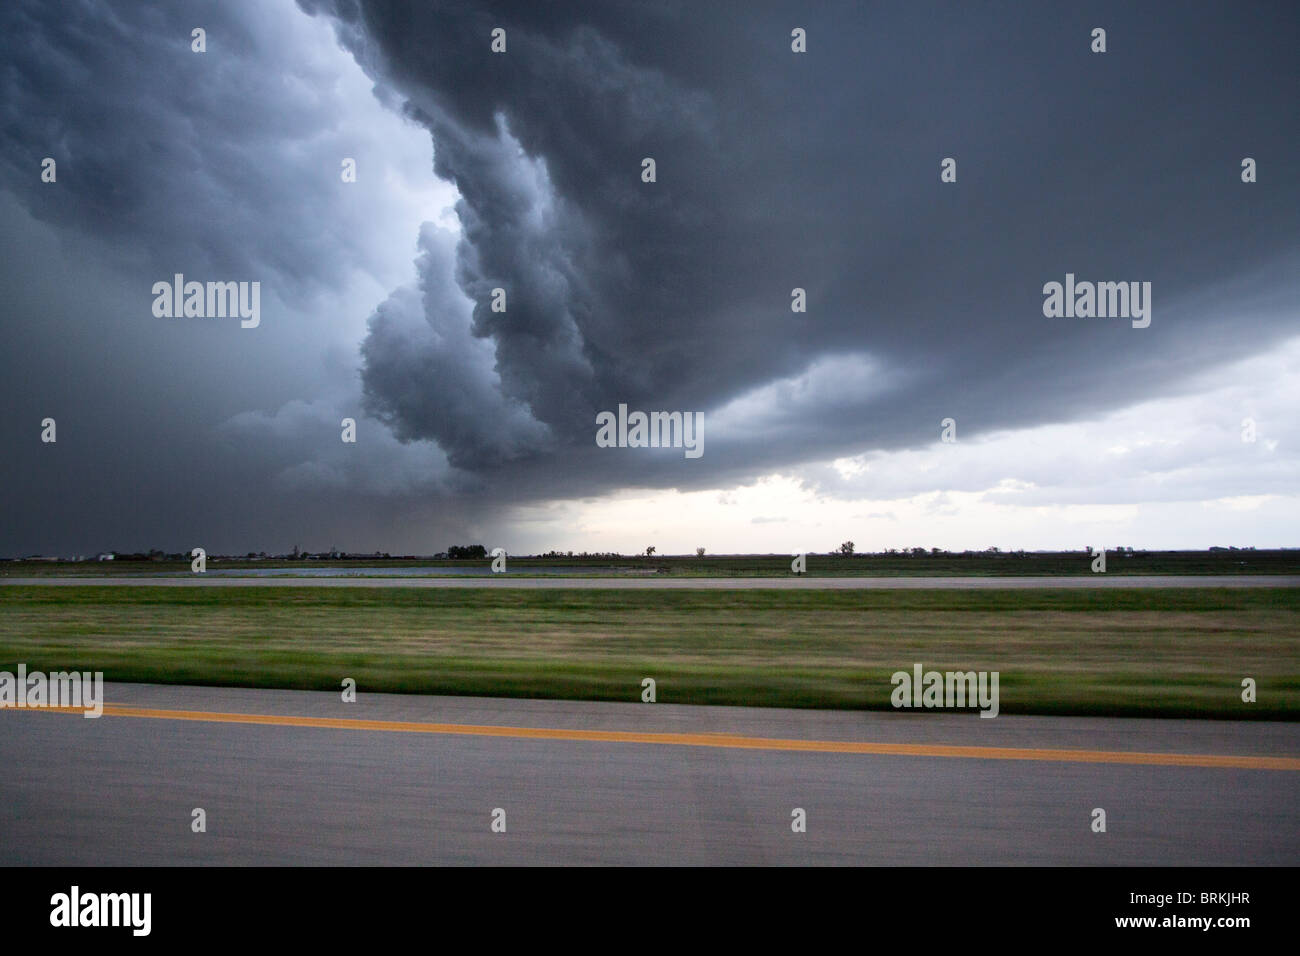 Running away from a severe thudnerstorm in rural Nebraska, May 24, 2010. Stock Photo